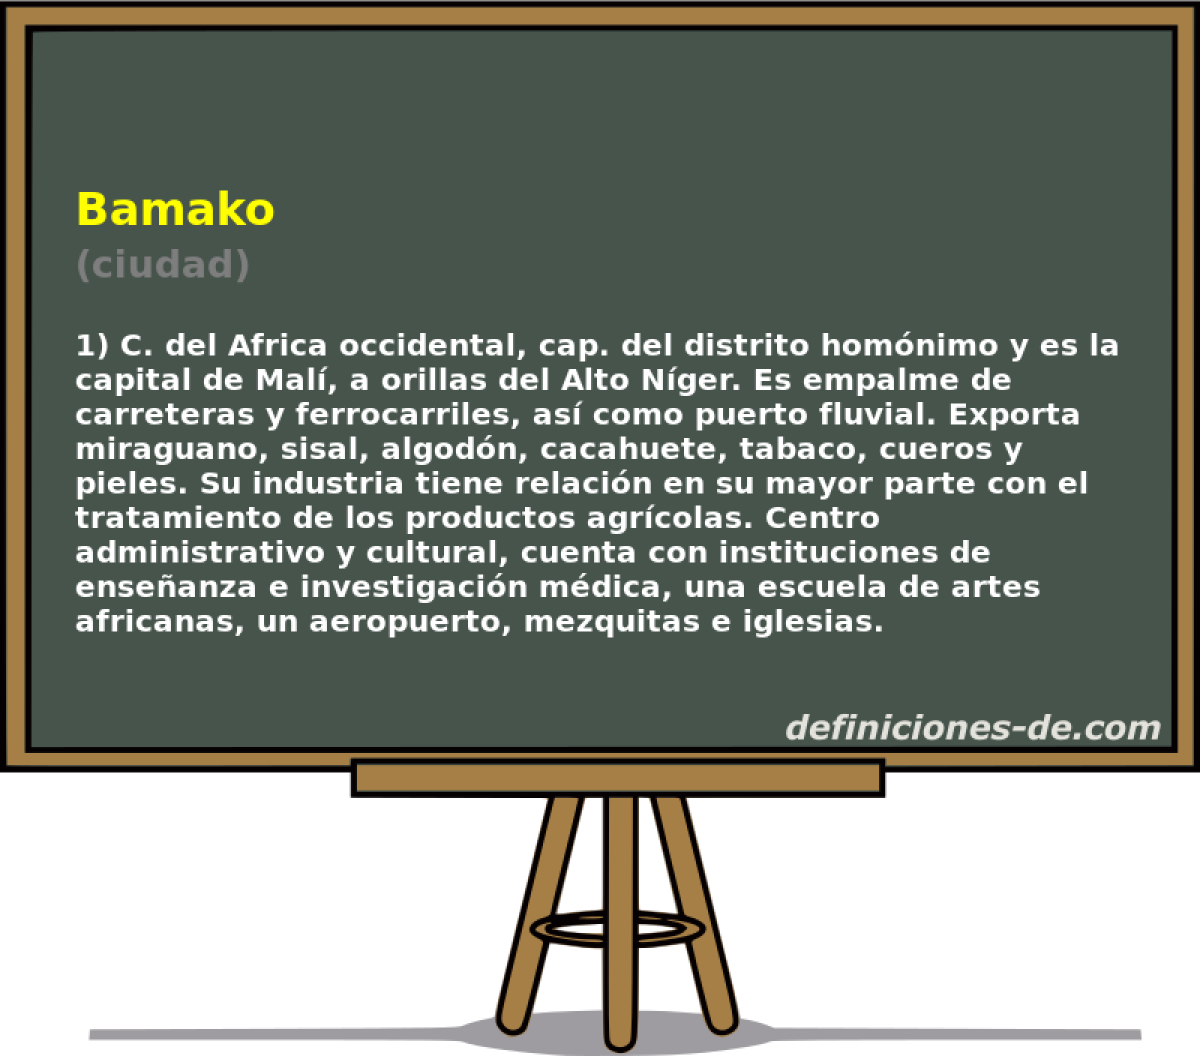 Bamako (ciudad)